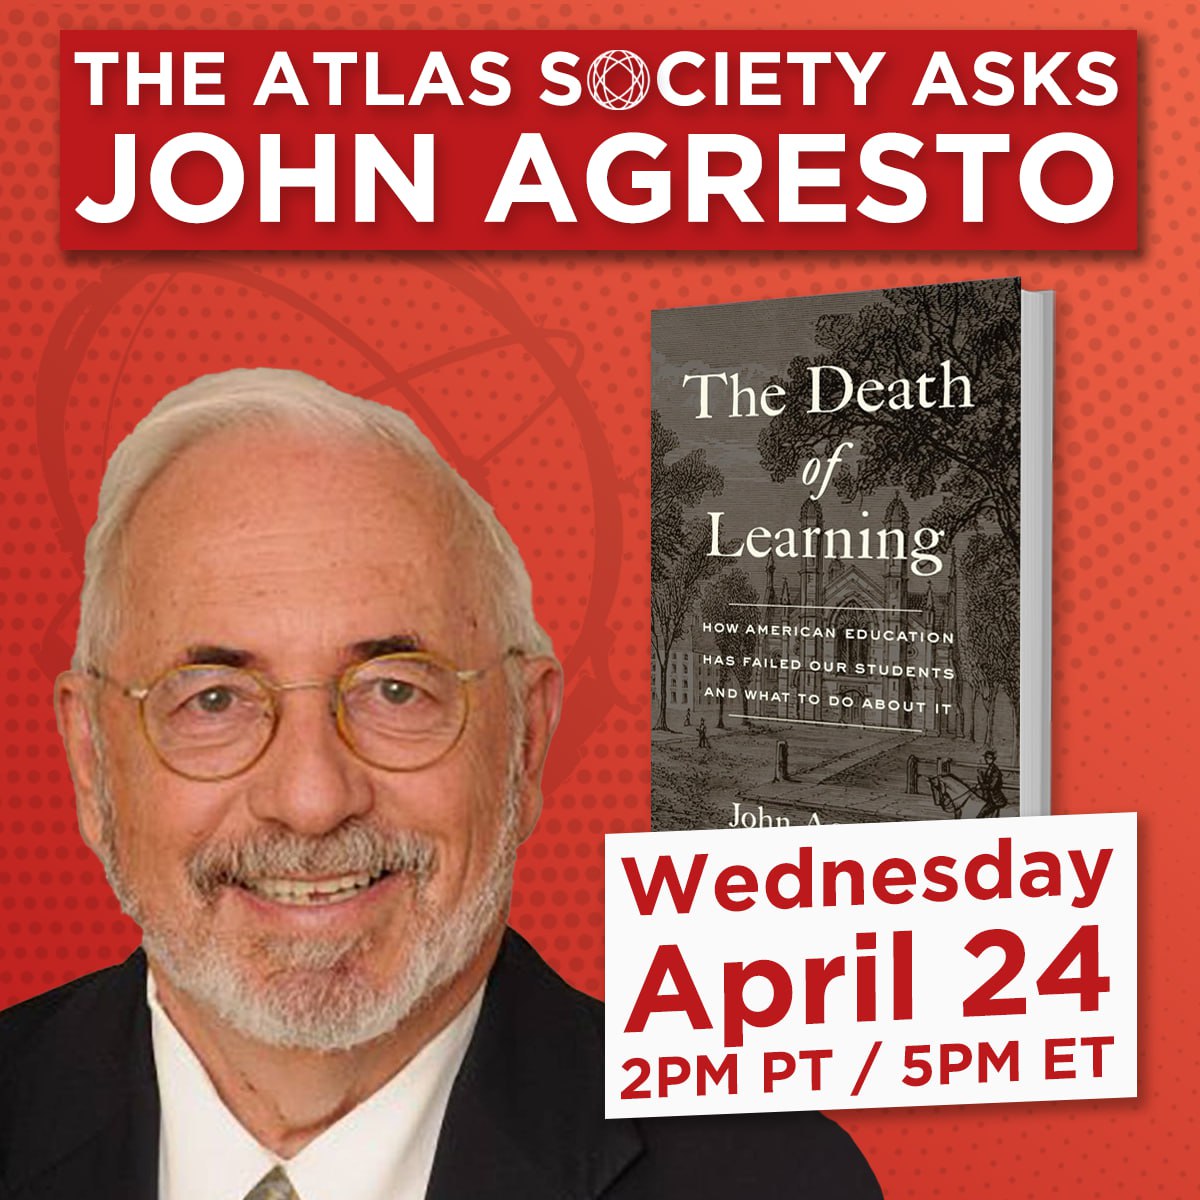 The Death of Learning: The Atlas Society Asks John Agresto